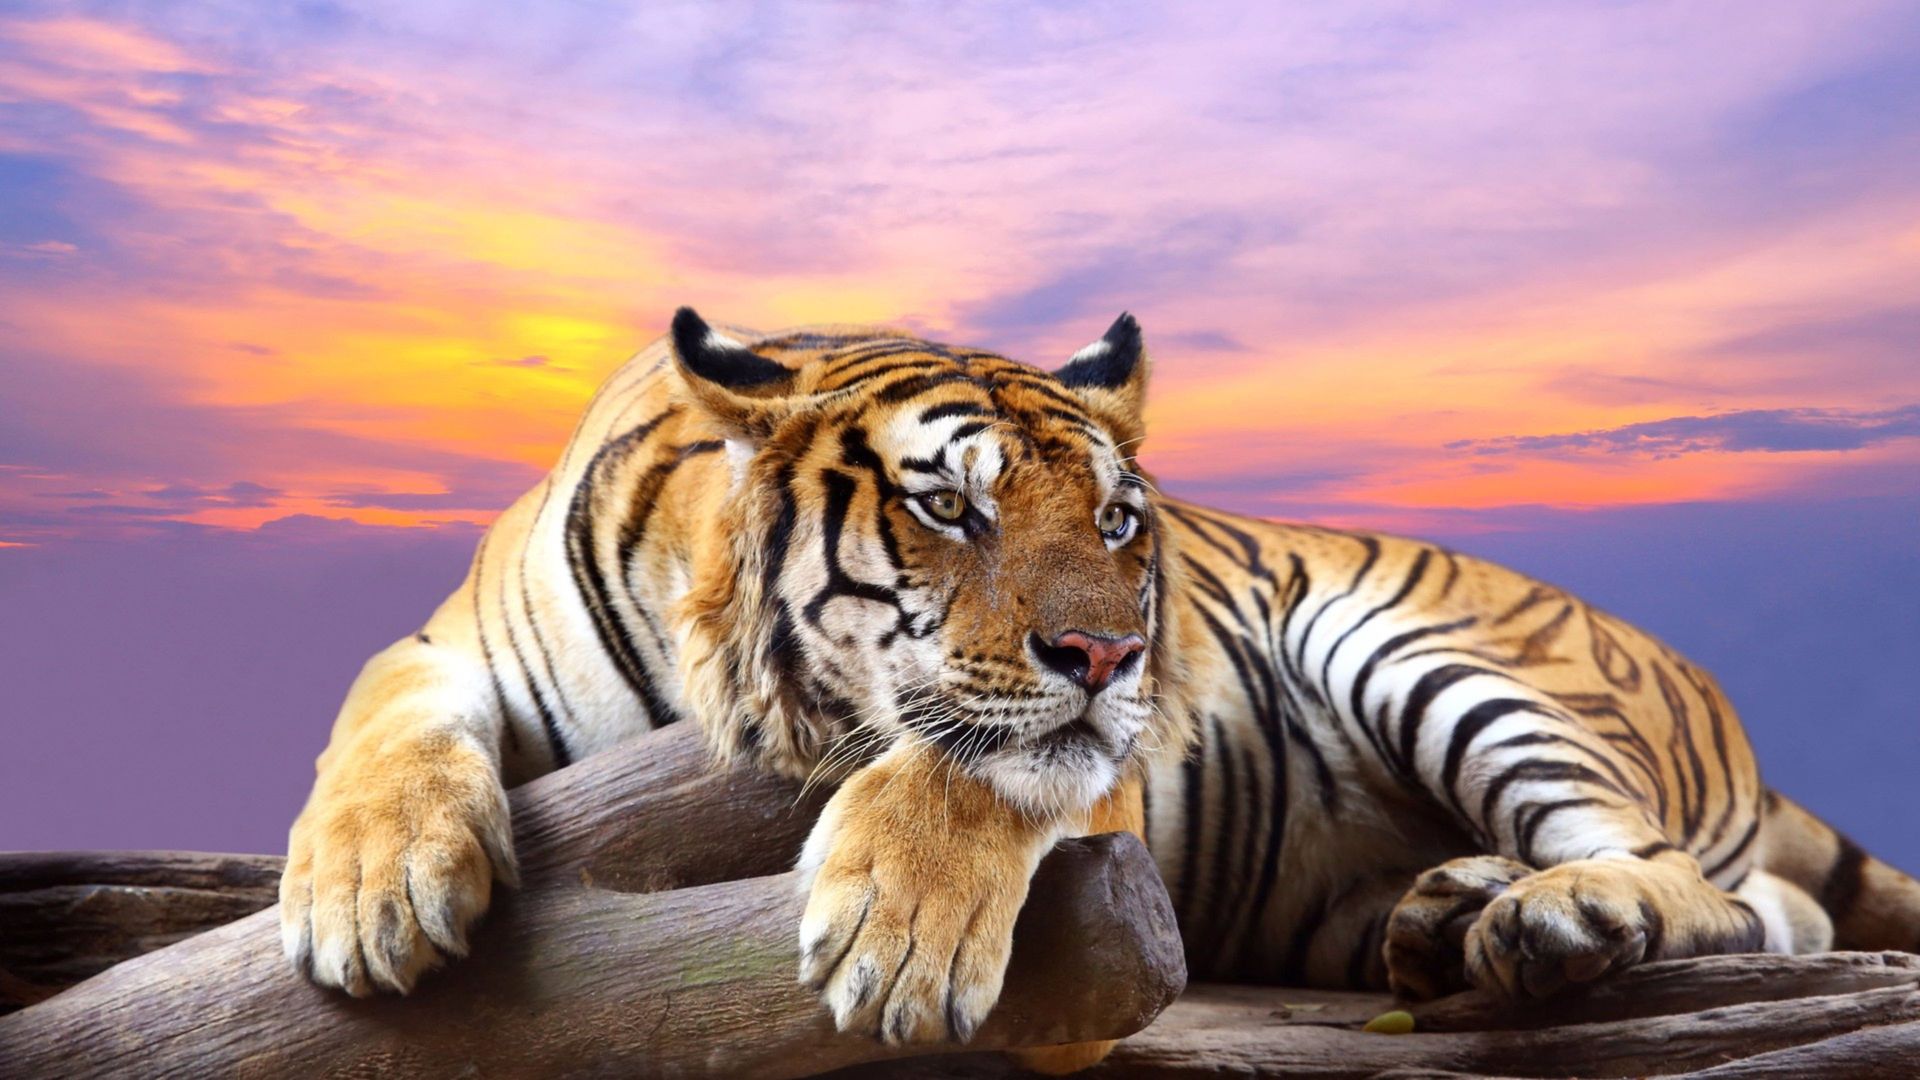 Tiger Sunset Wallpaper - High Resolution Images Animals - 1920x1080  Wallpaper 